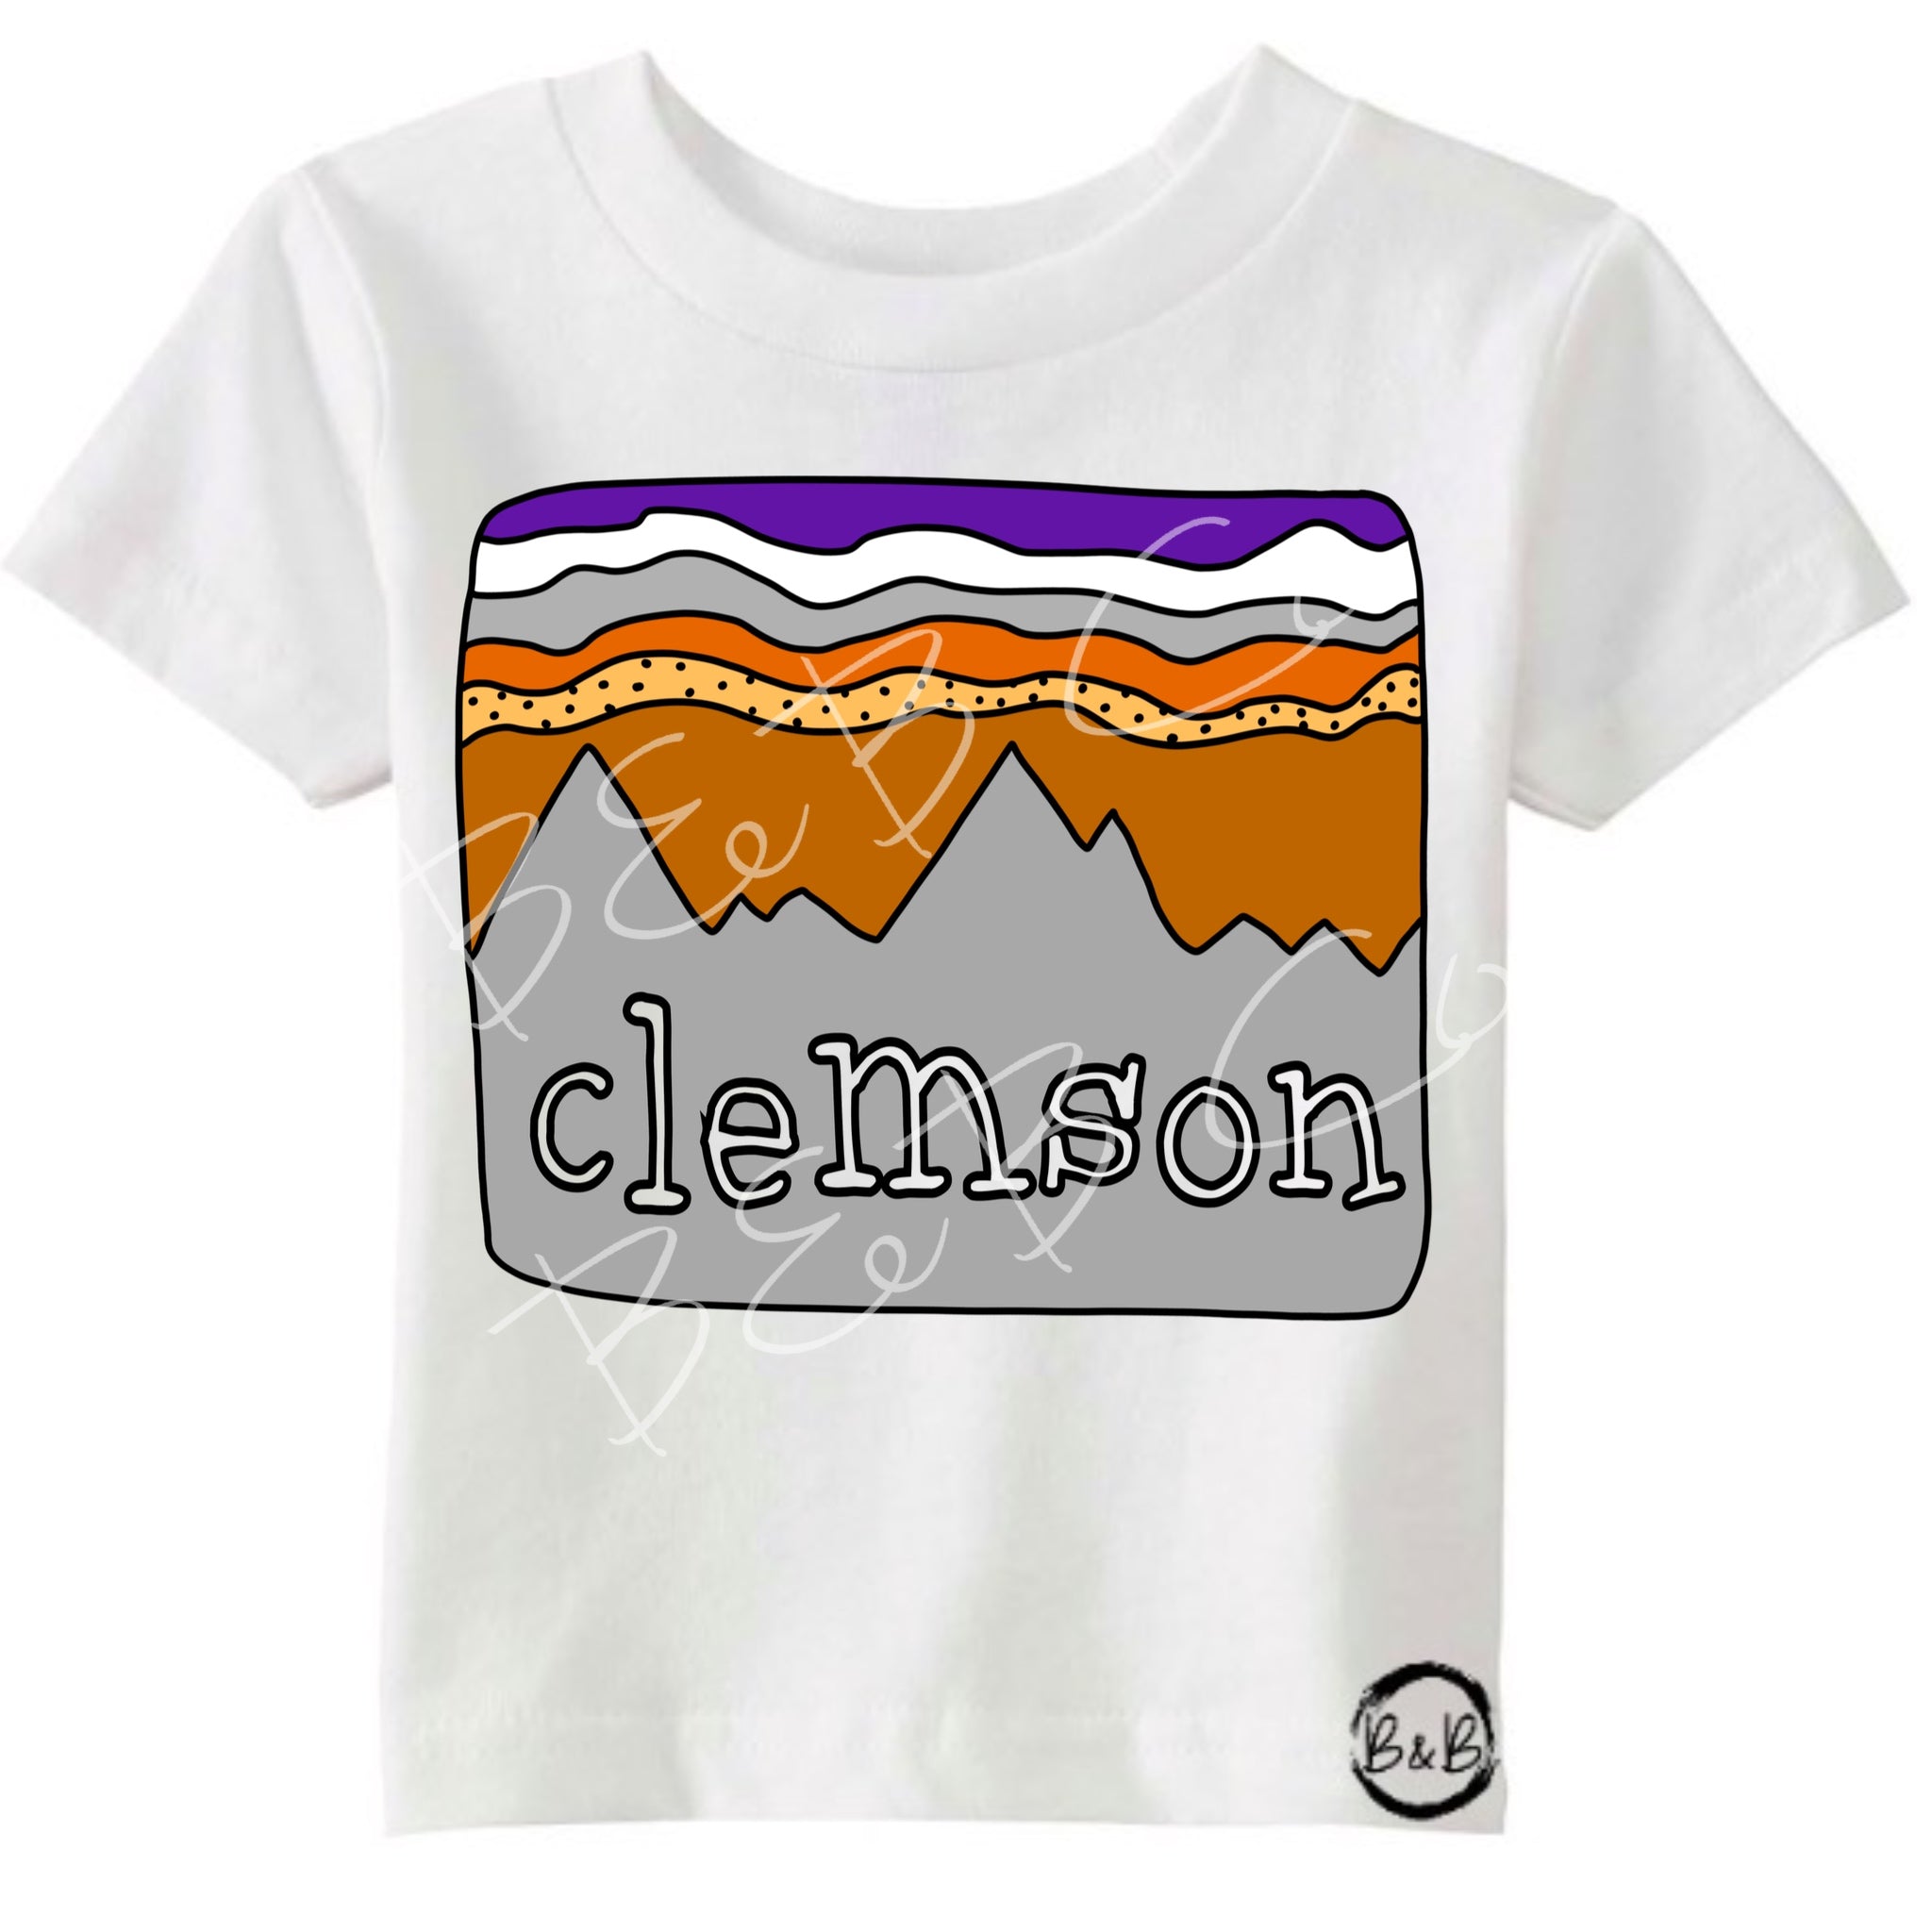 Clemson Mountains - ADULT